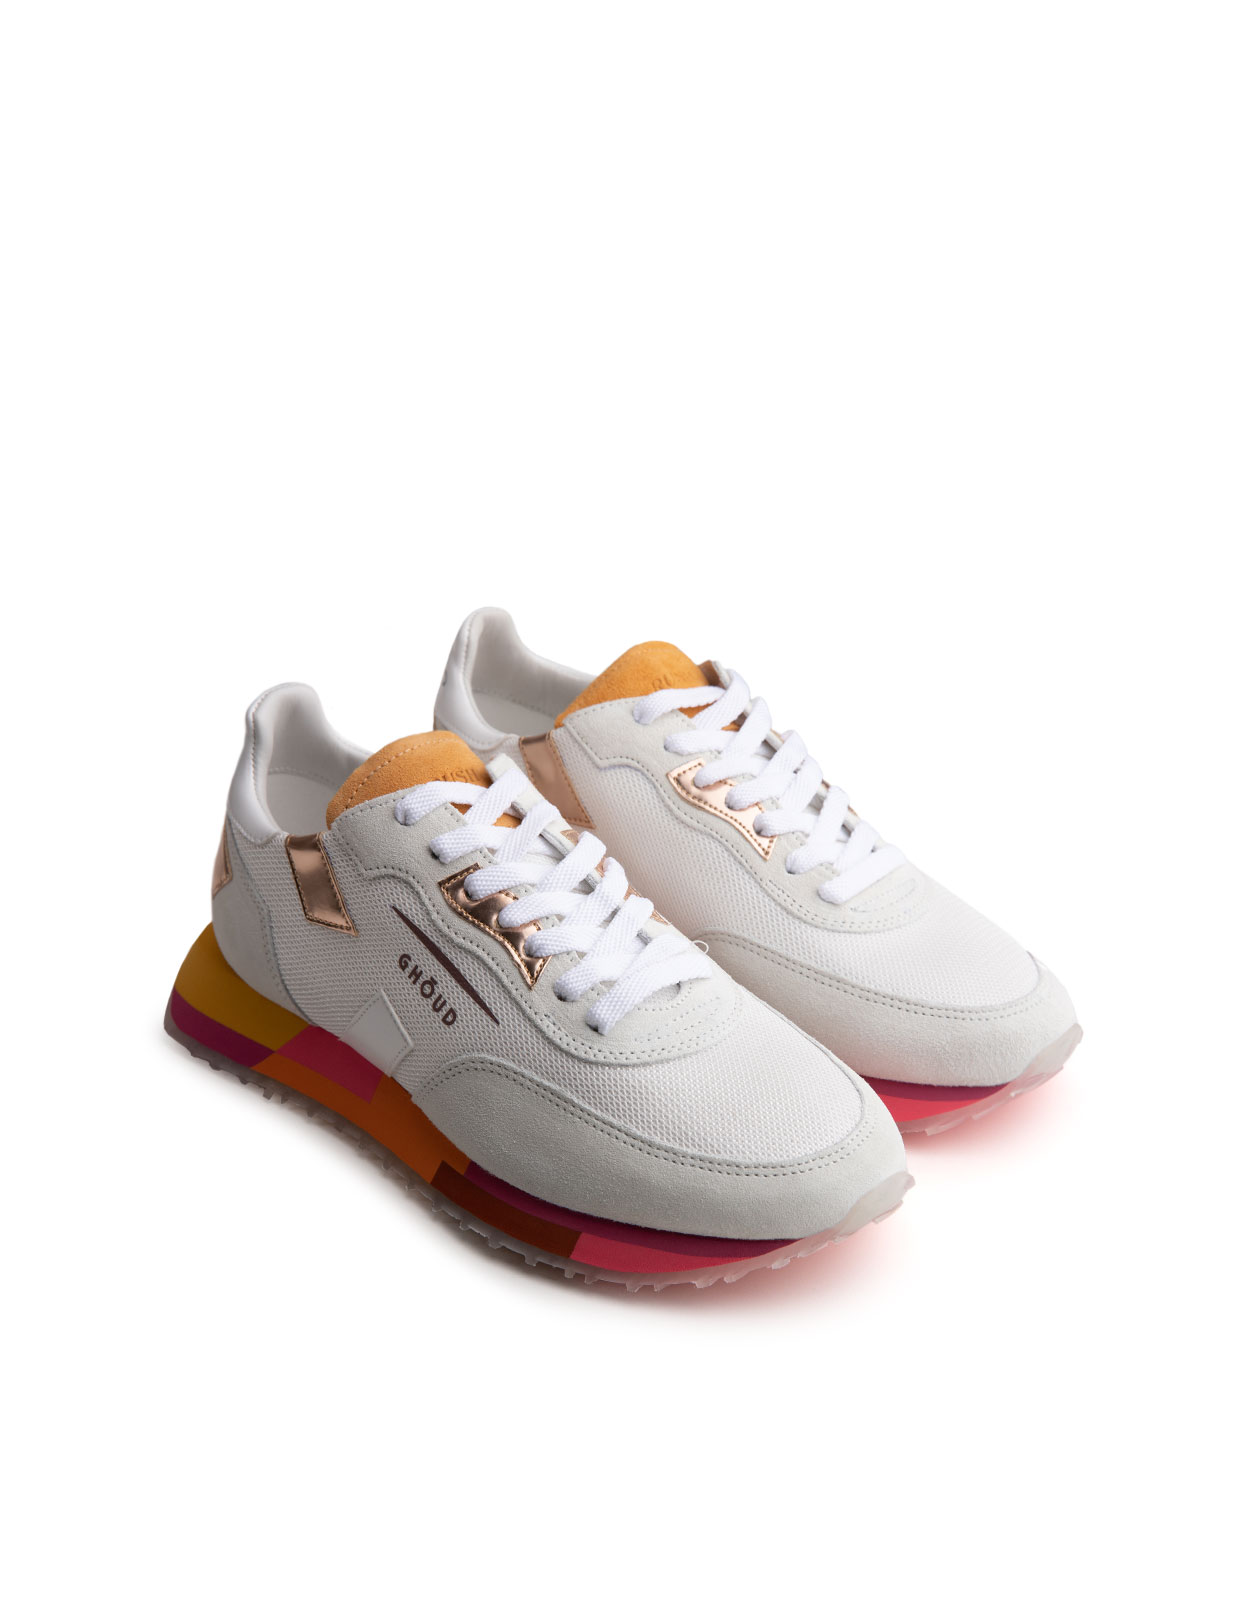 Rush M Low Sneakers White/Orange